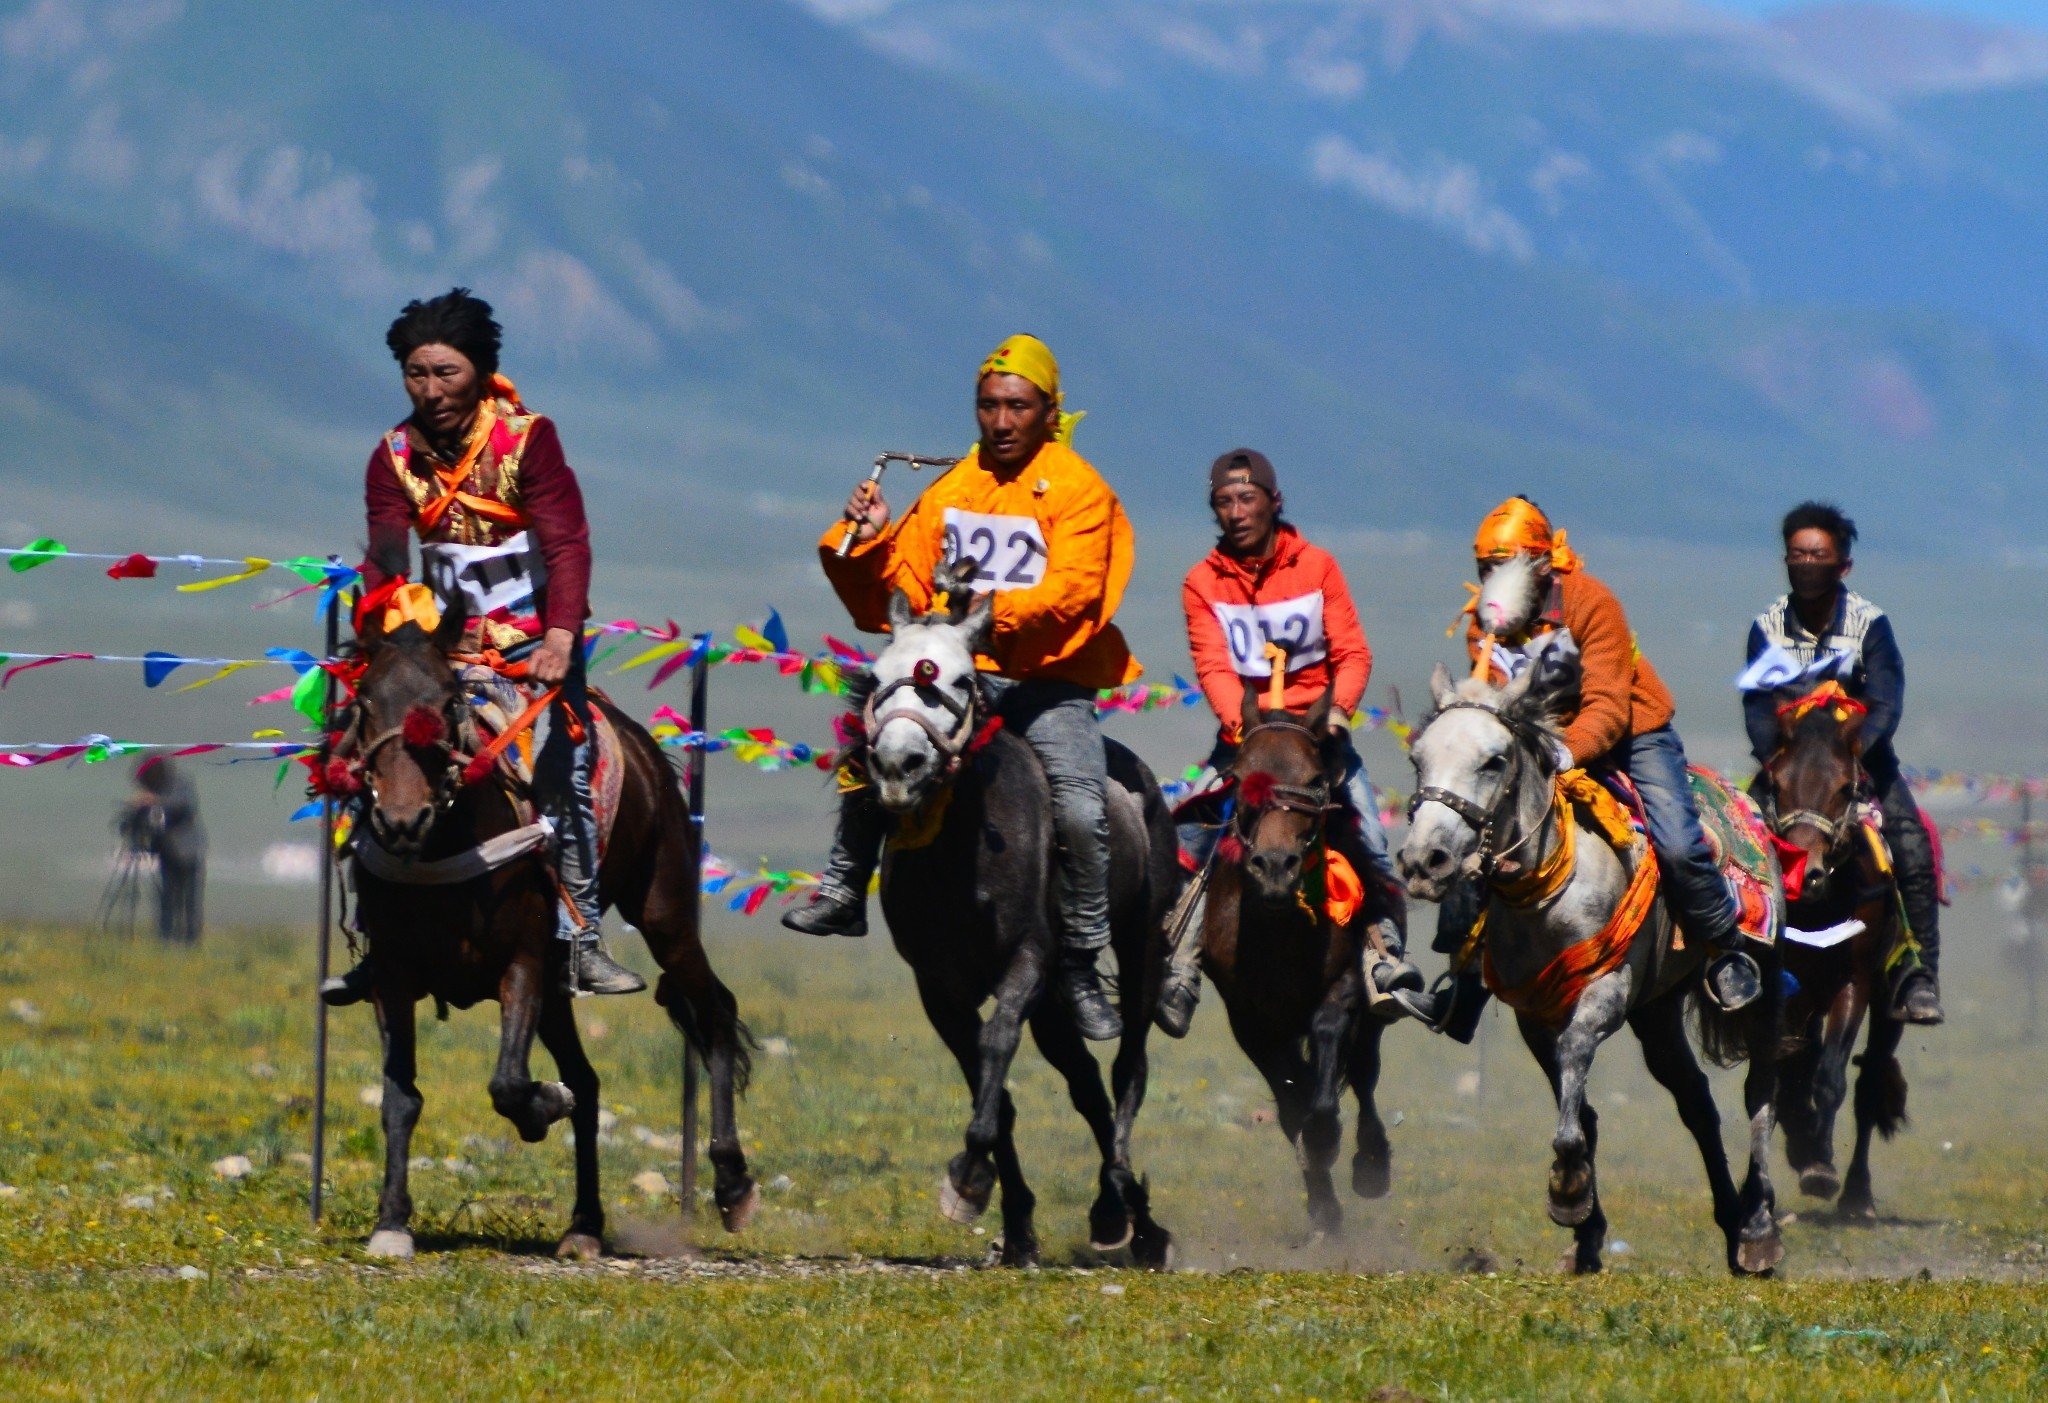 Visit the Yushu Horse Racing Festival